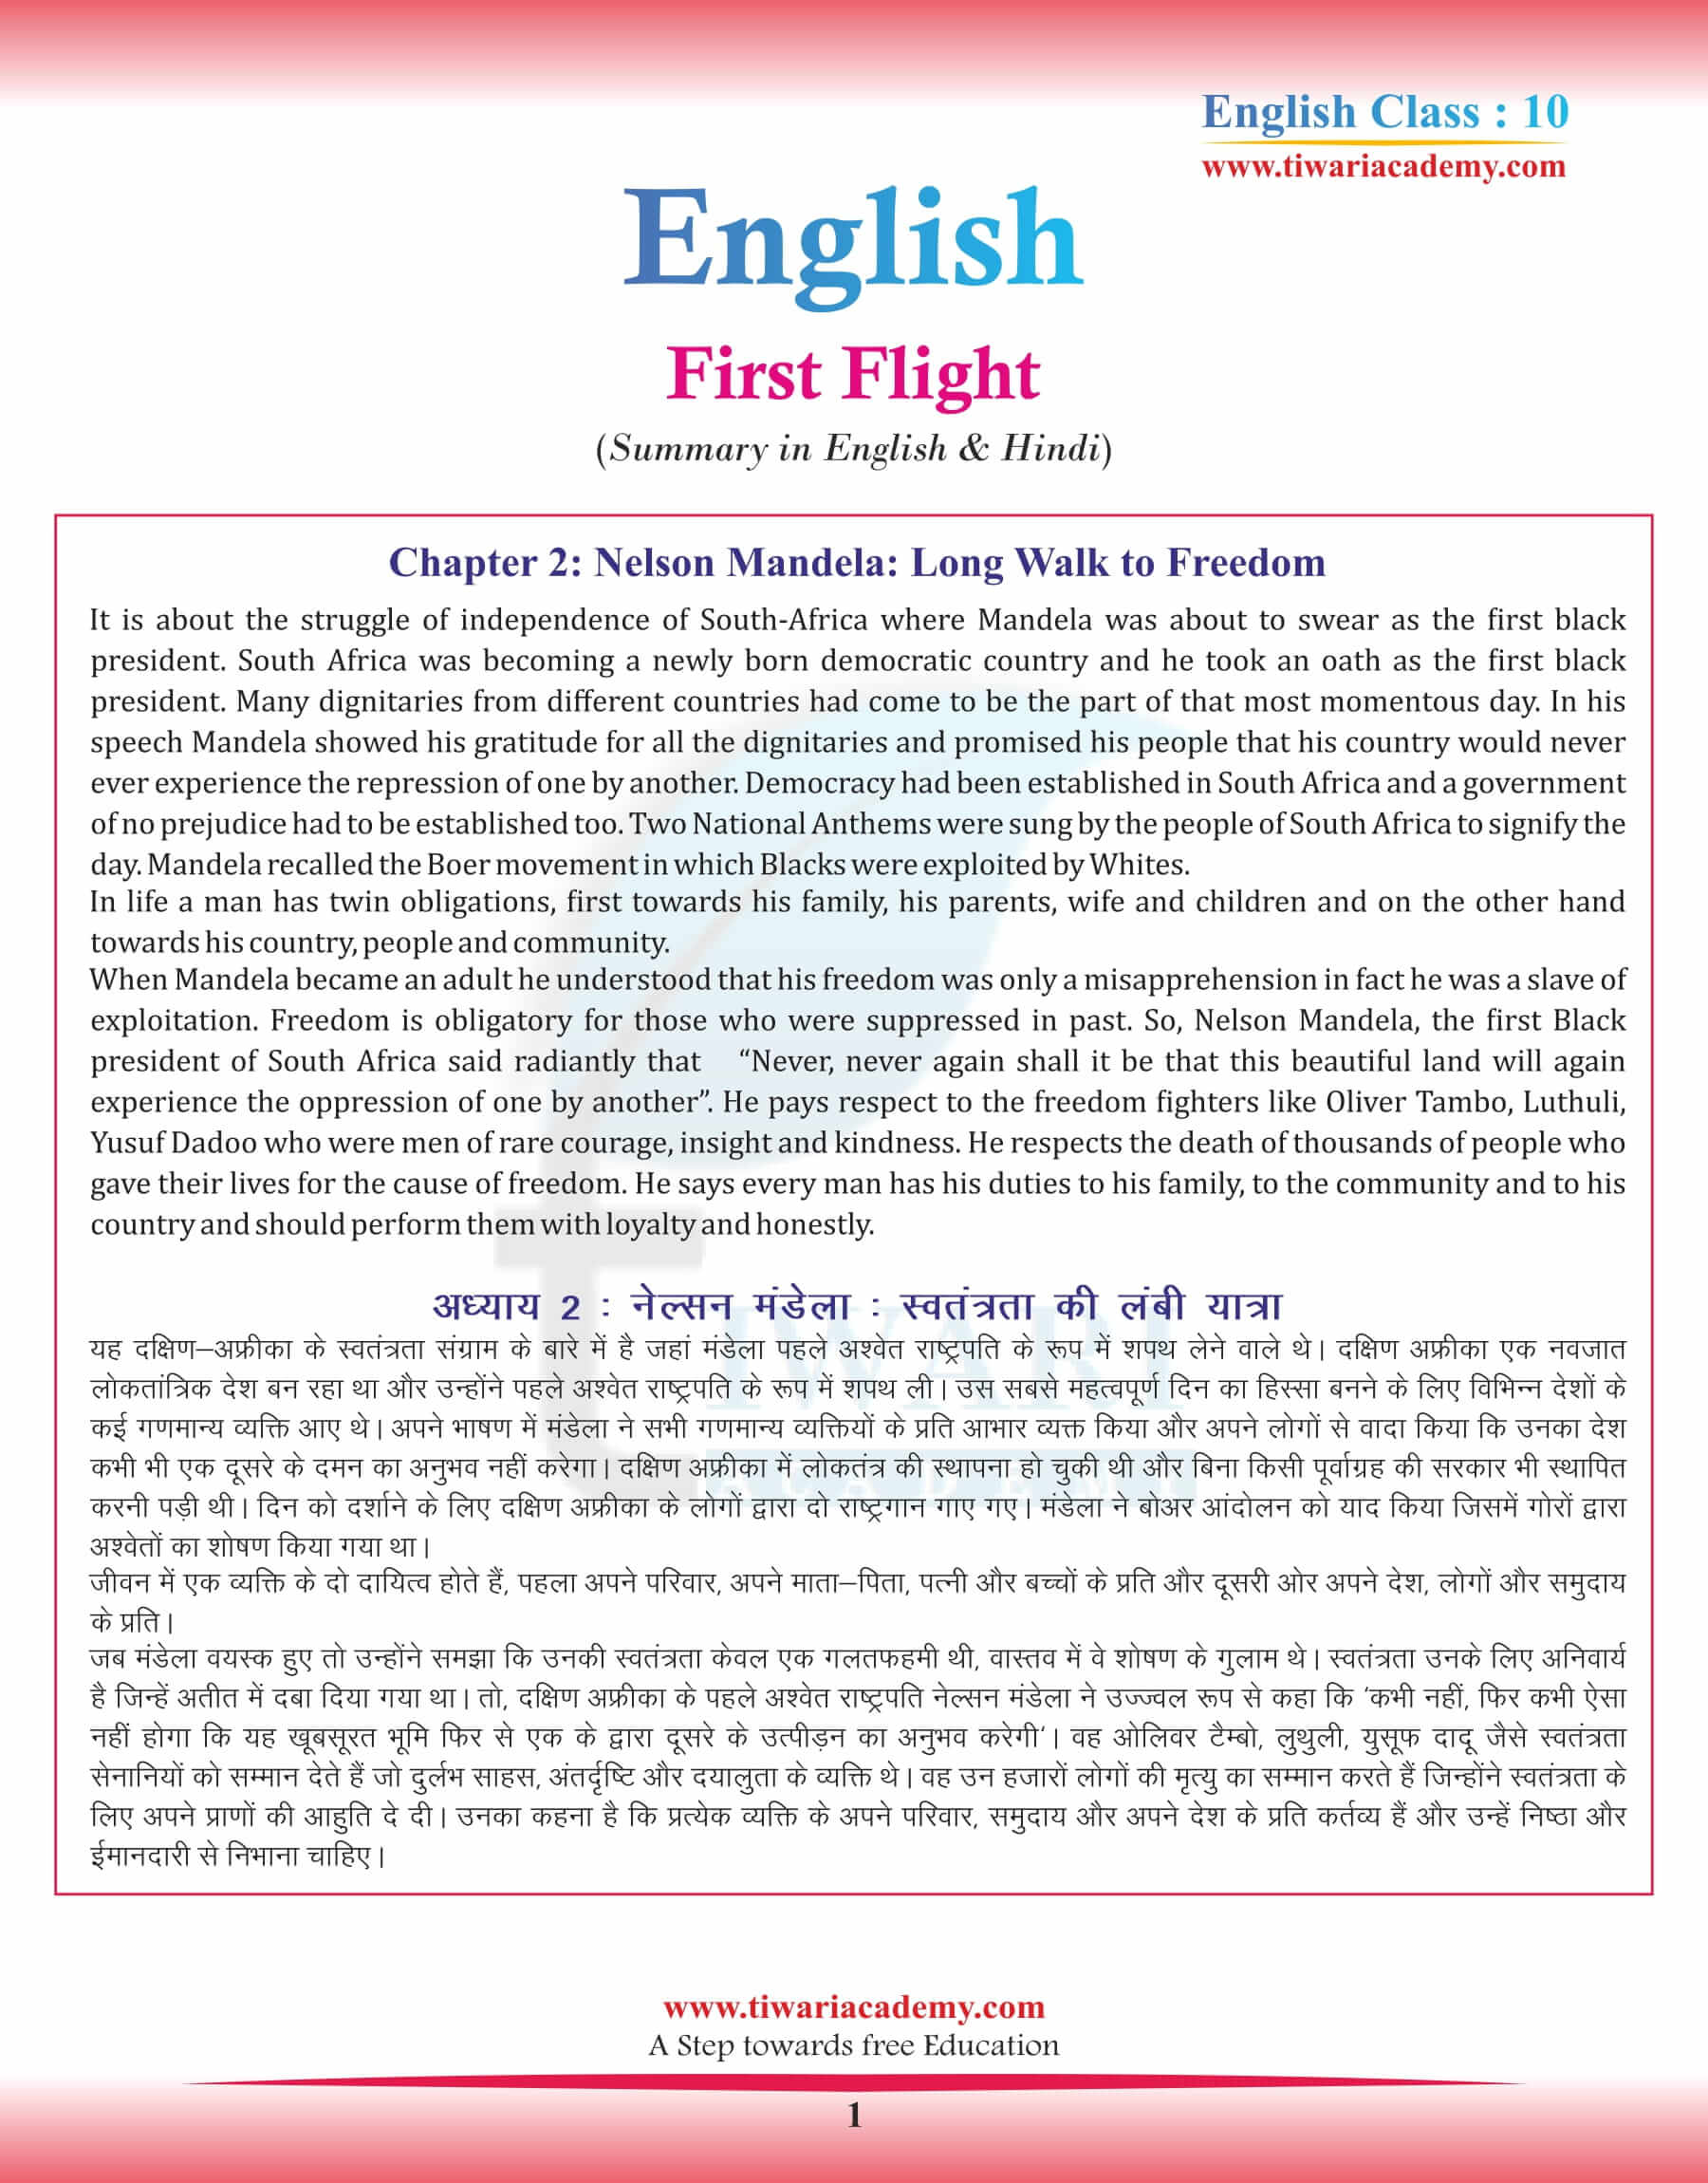 Class 10 English Chapter 2 Summary in Hindi